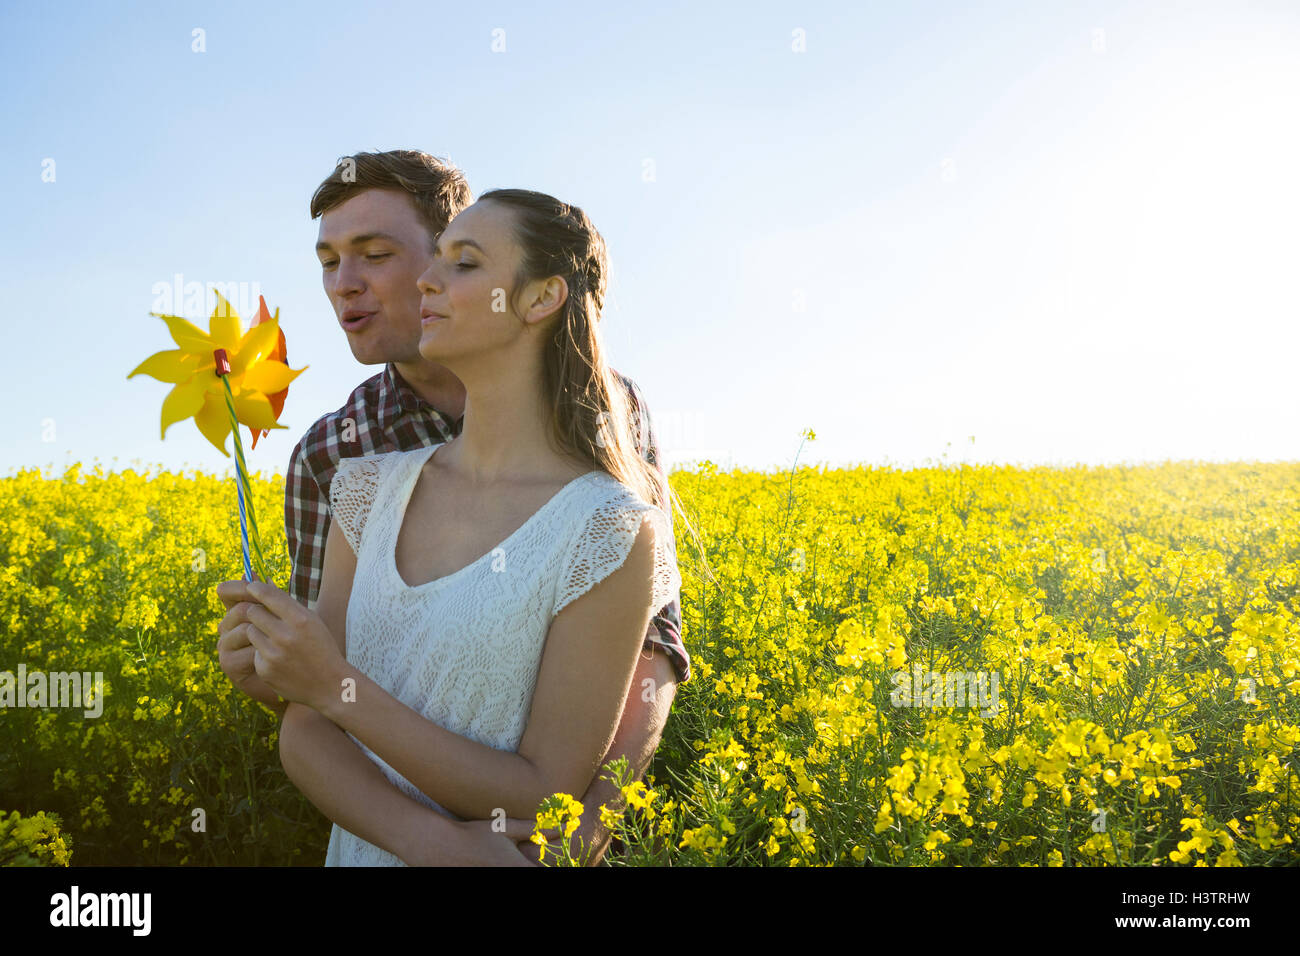 Couple holding blowing pinwheel in mustard field Stock Photo